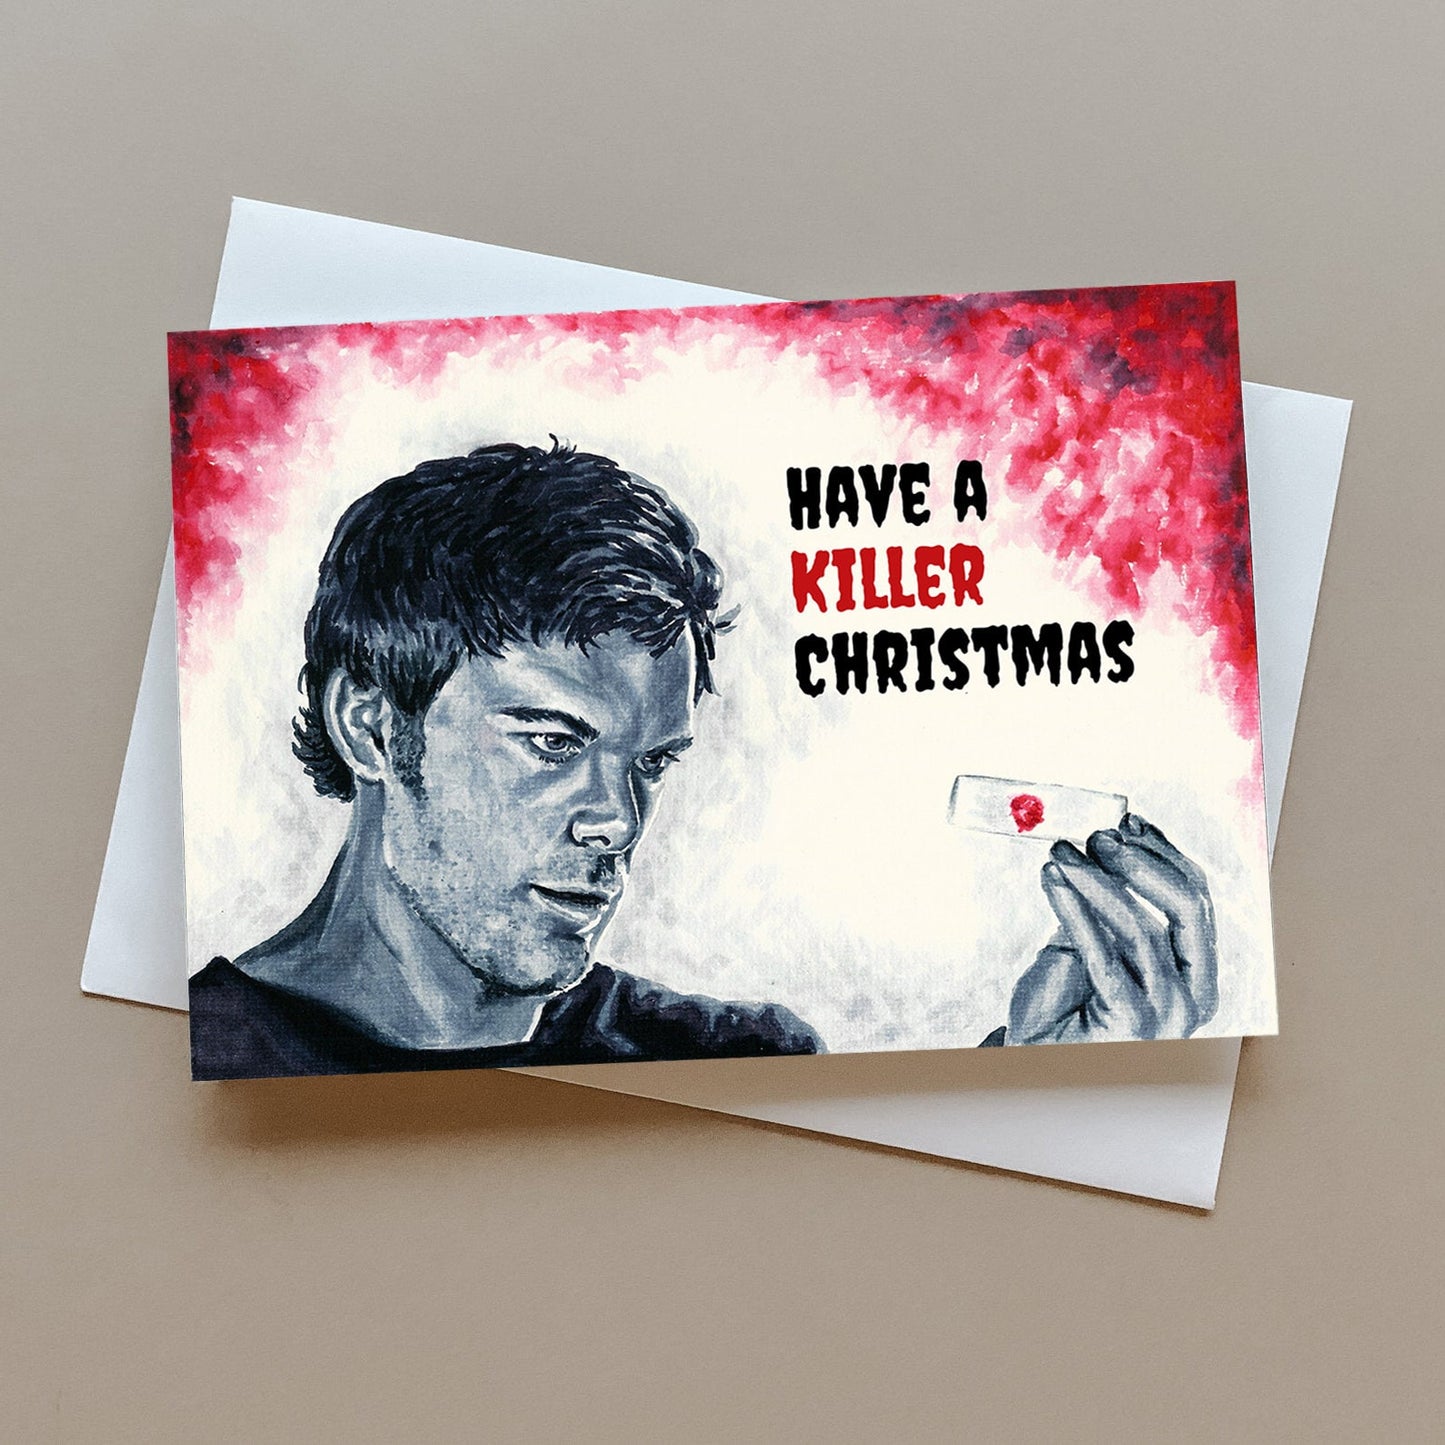 Dexter Christmas card, Dexter Morgan card, Dexter TV series, Serial killer card, Michael C Hall card, personalised card, holiday card